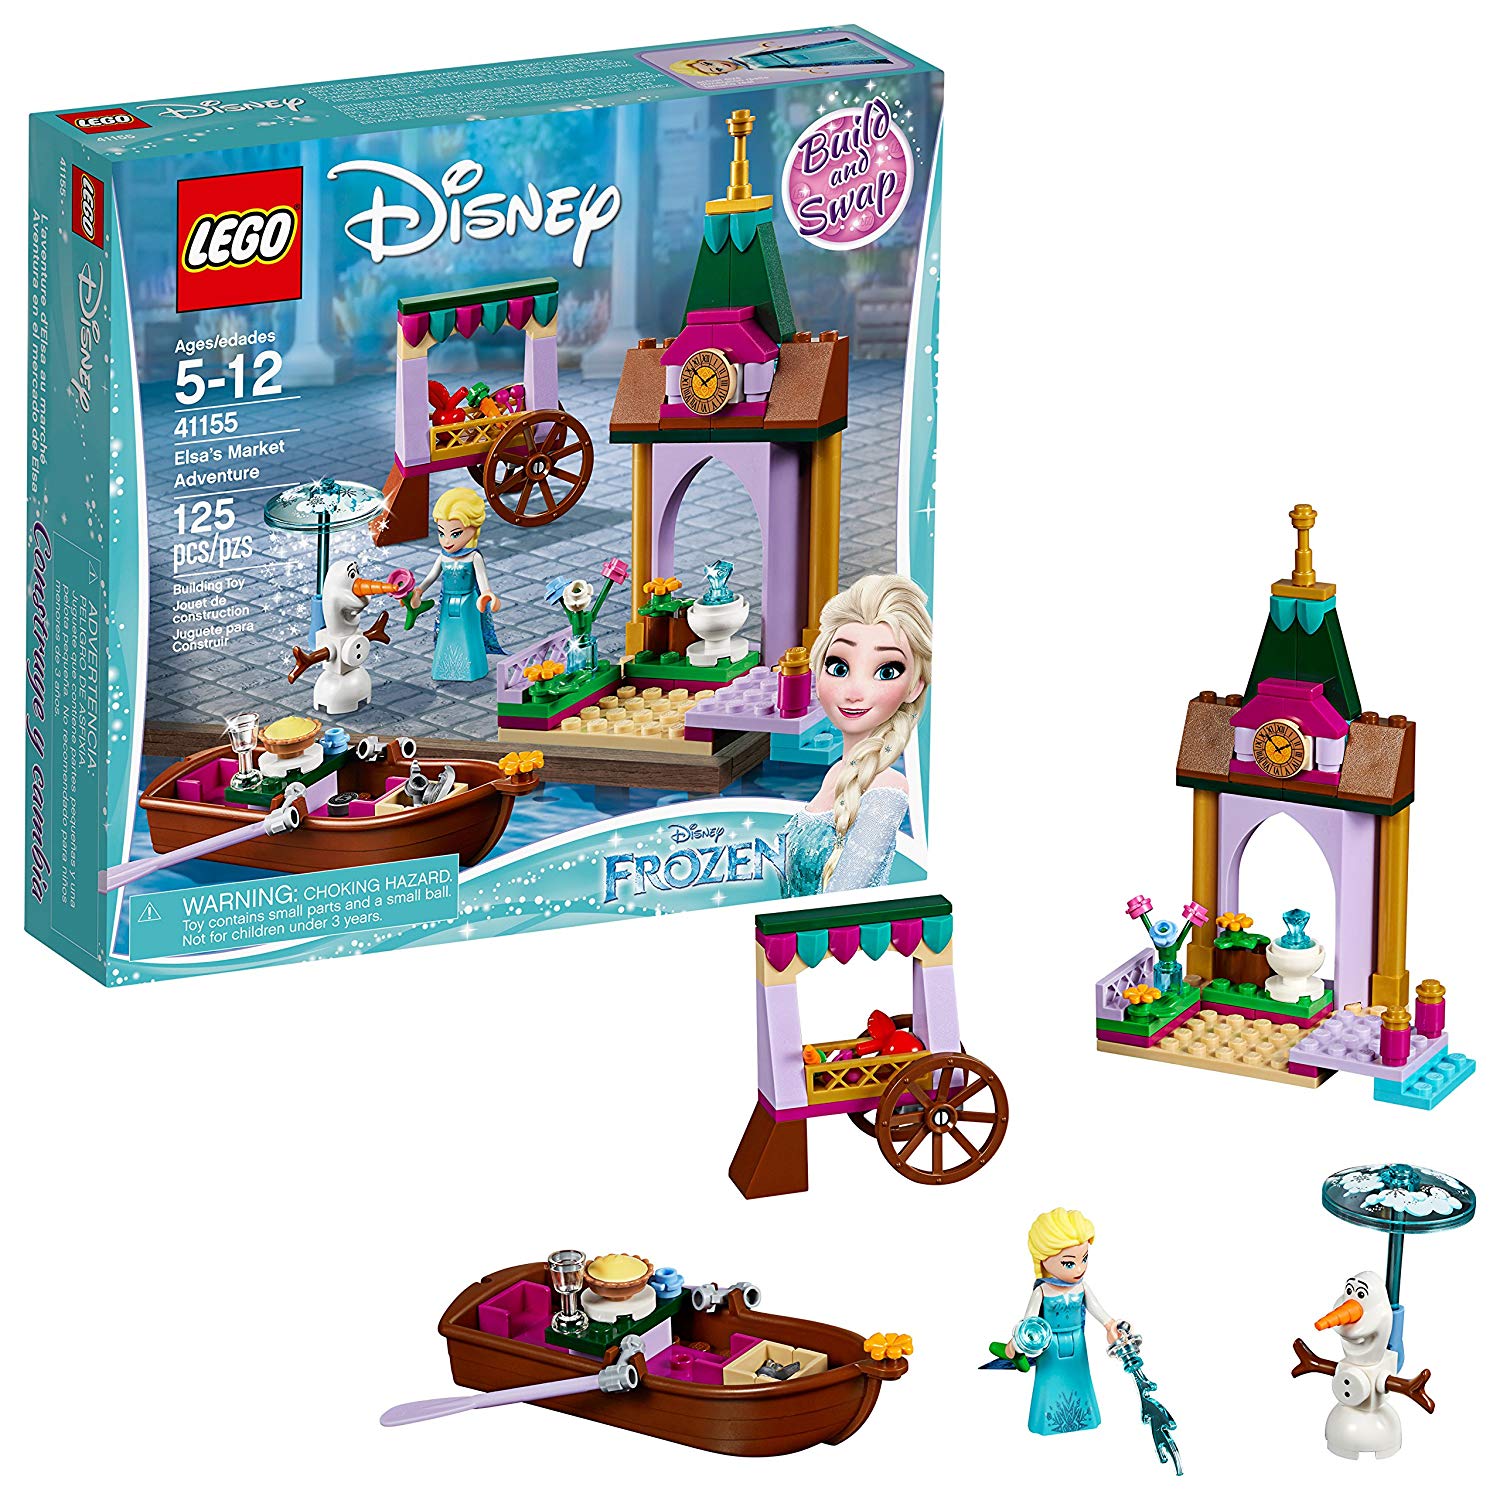 LEGO Disney Princess Elsa's Market Adventure 41155 Building Kit (125 Pieces